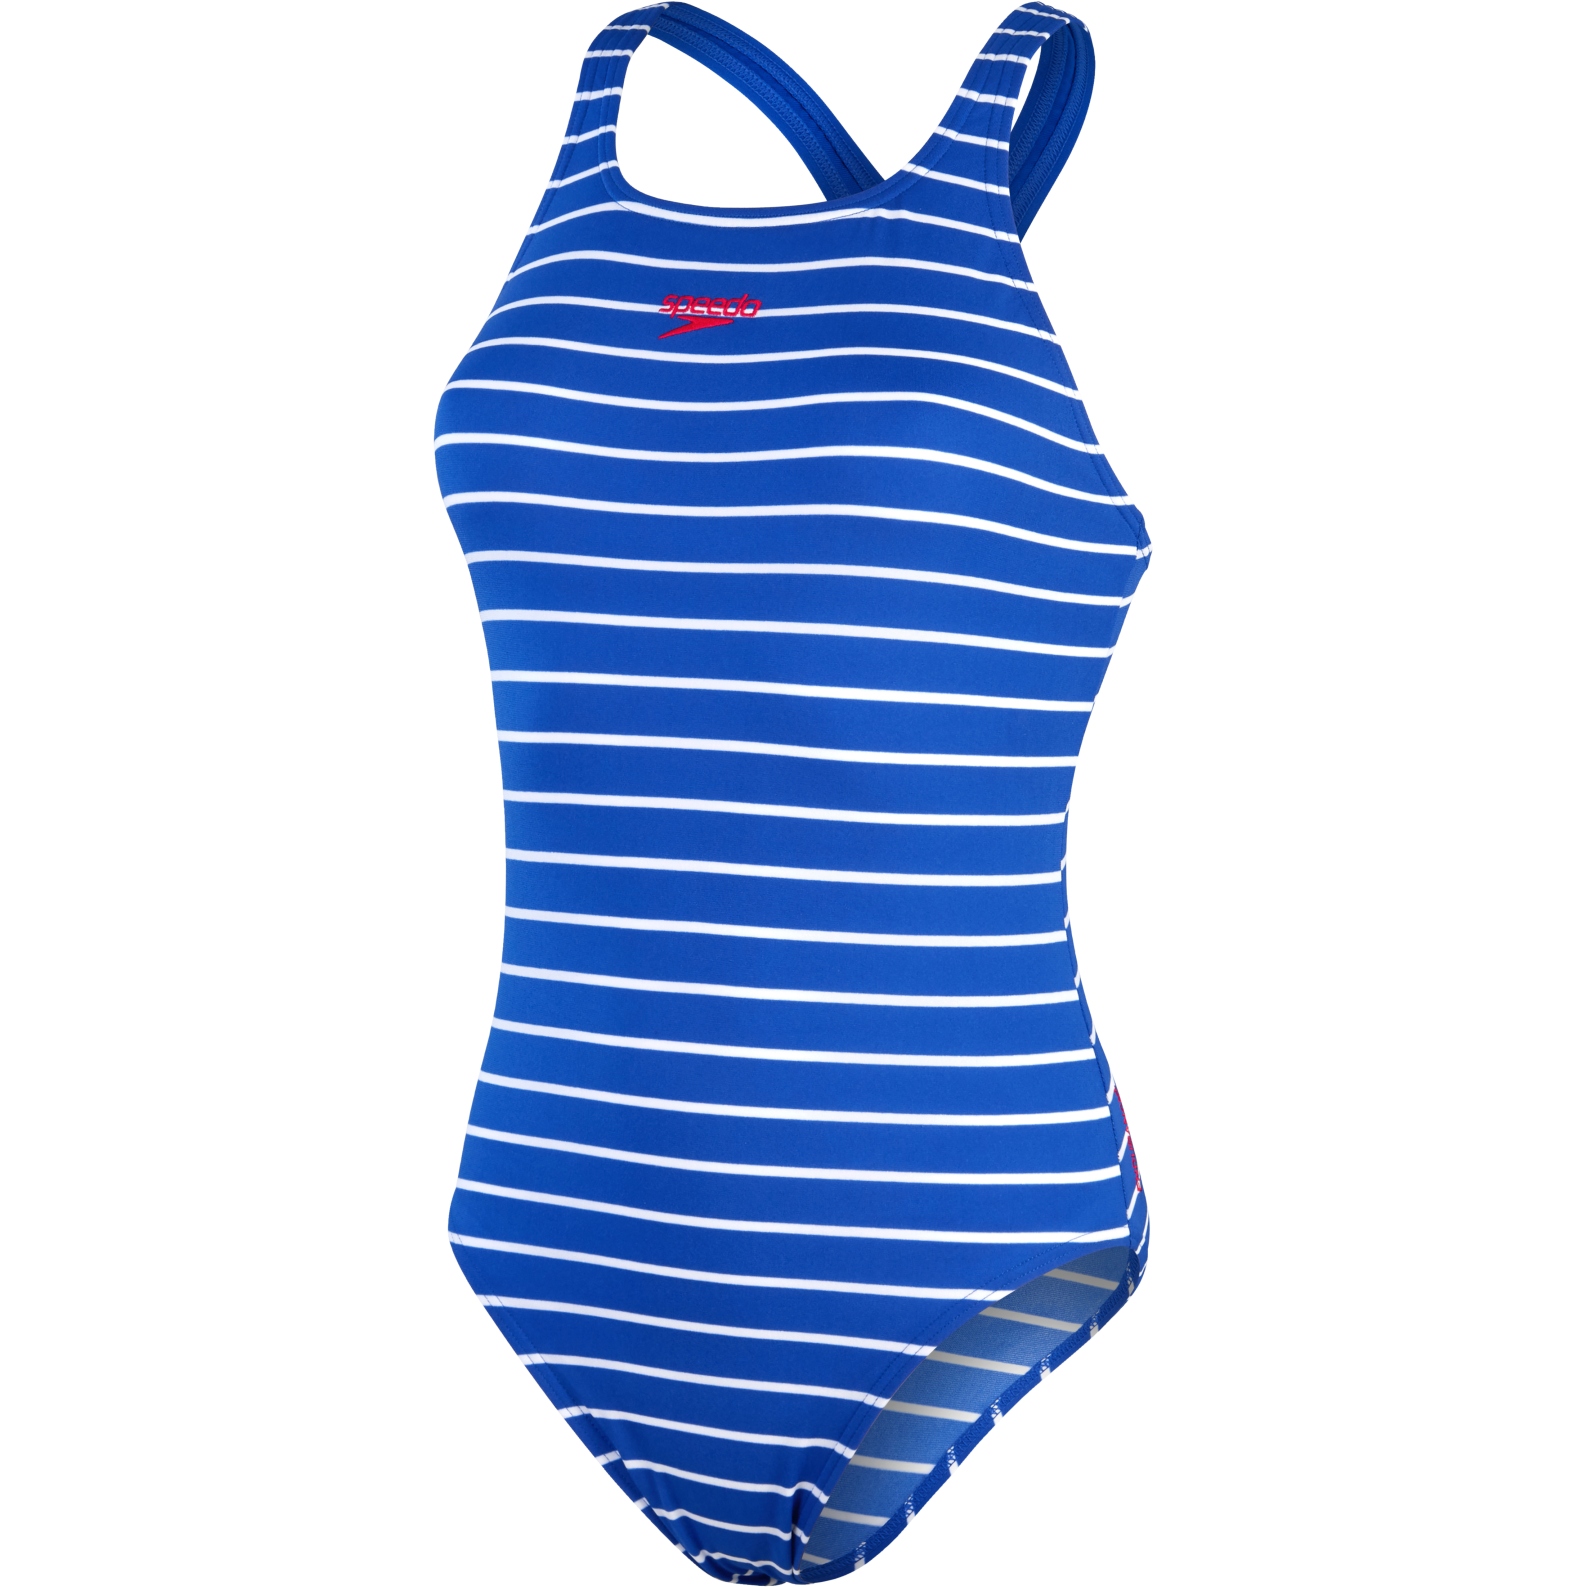 Picture of Speedo ECO Endurance+ Printed Medalist Swimsuit Women - chroma blue/white (fed red branding)